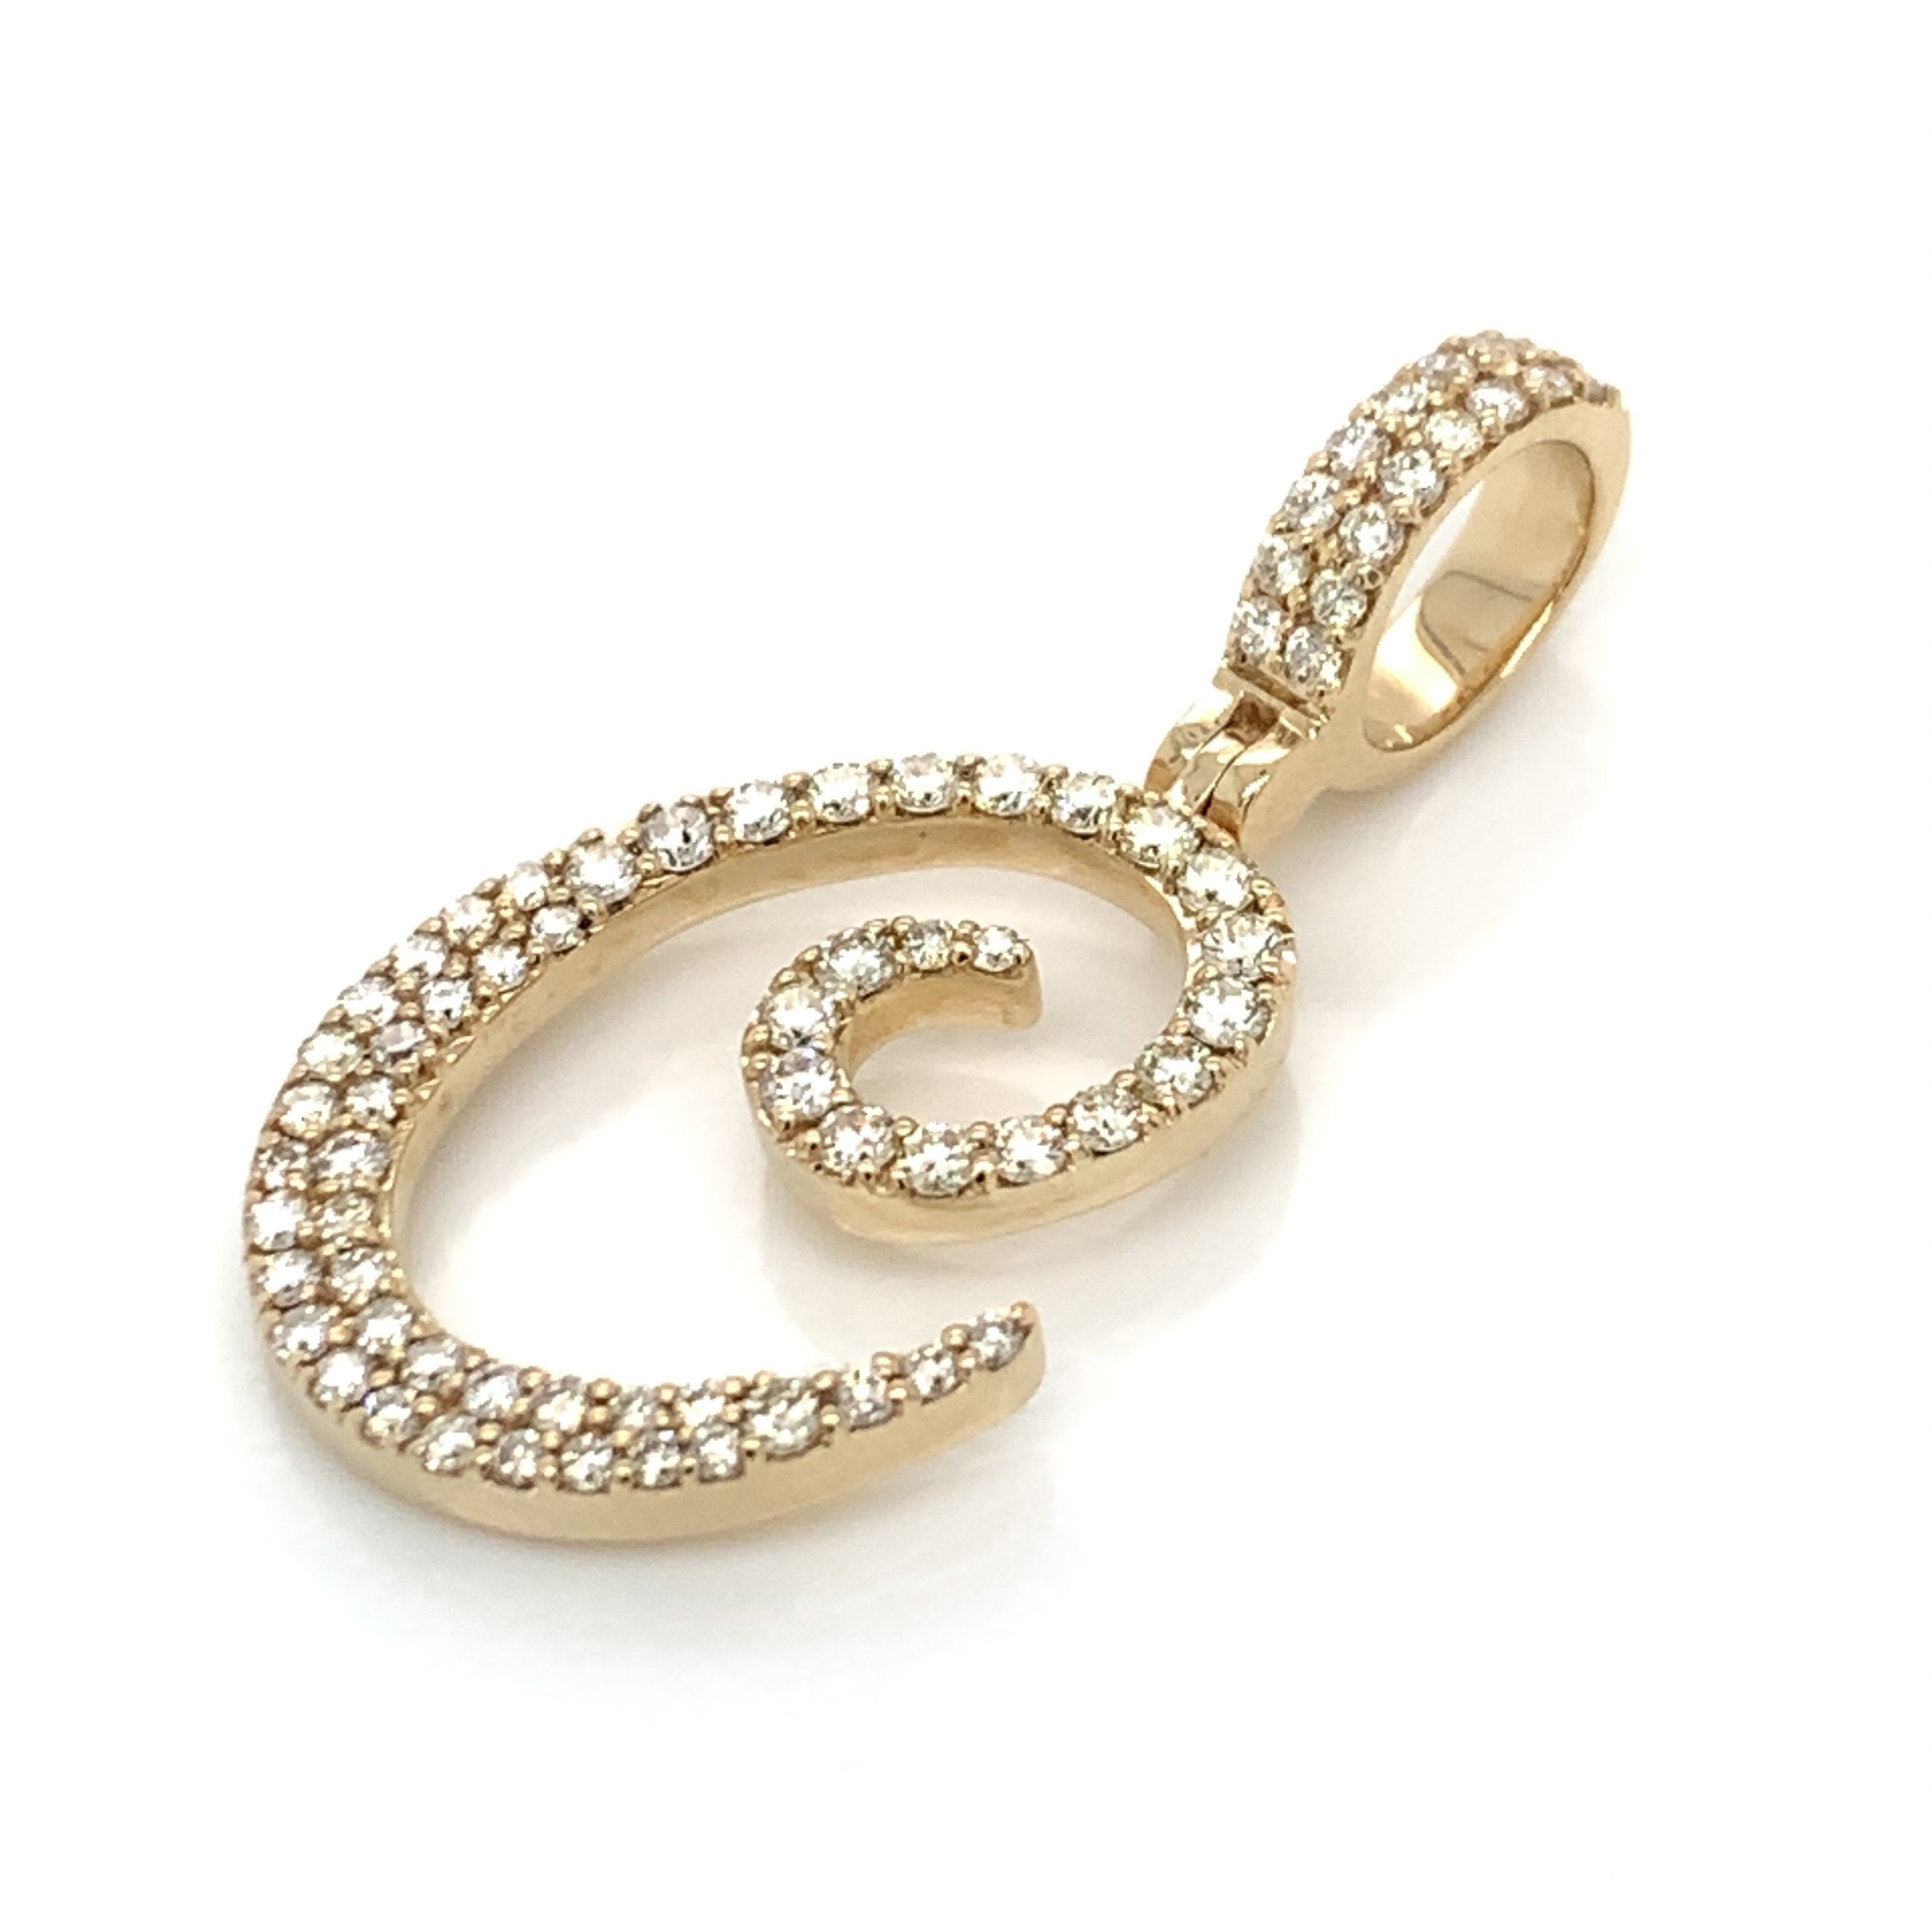 1.00 CT. Diamond Initial "C" Pendant in Gold With Chain - White Carat Diamonds 